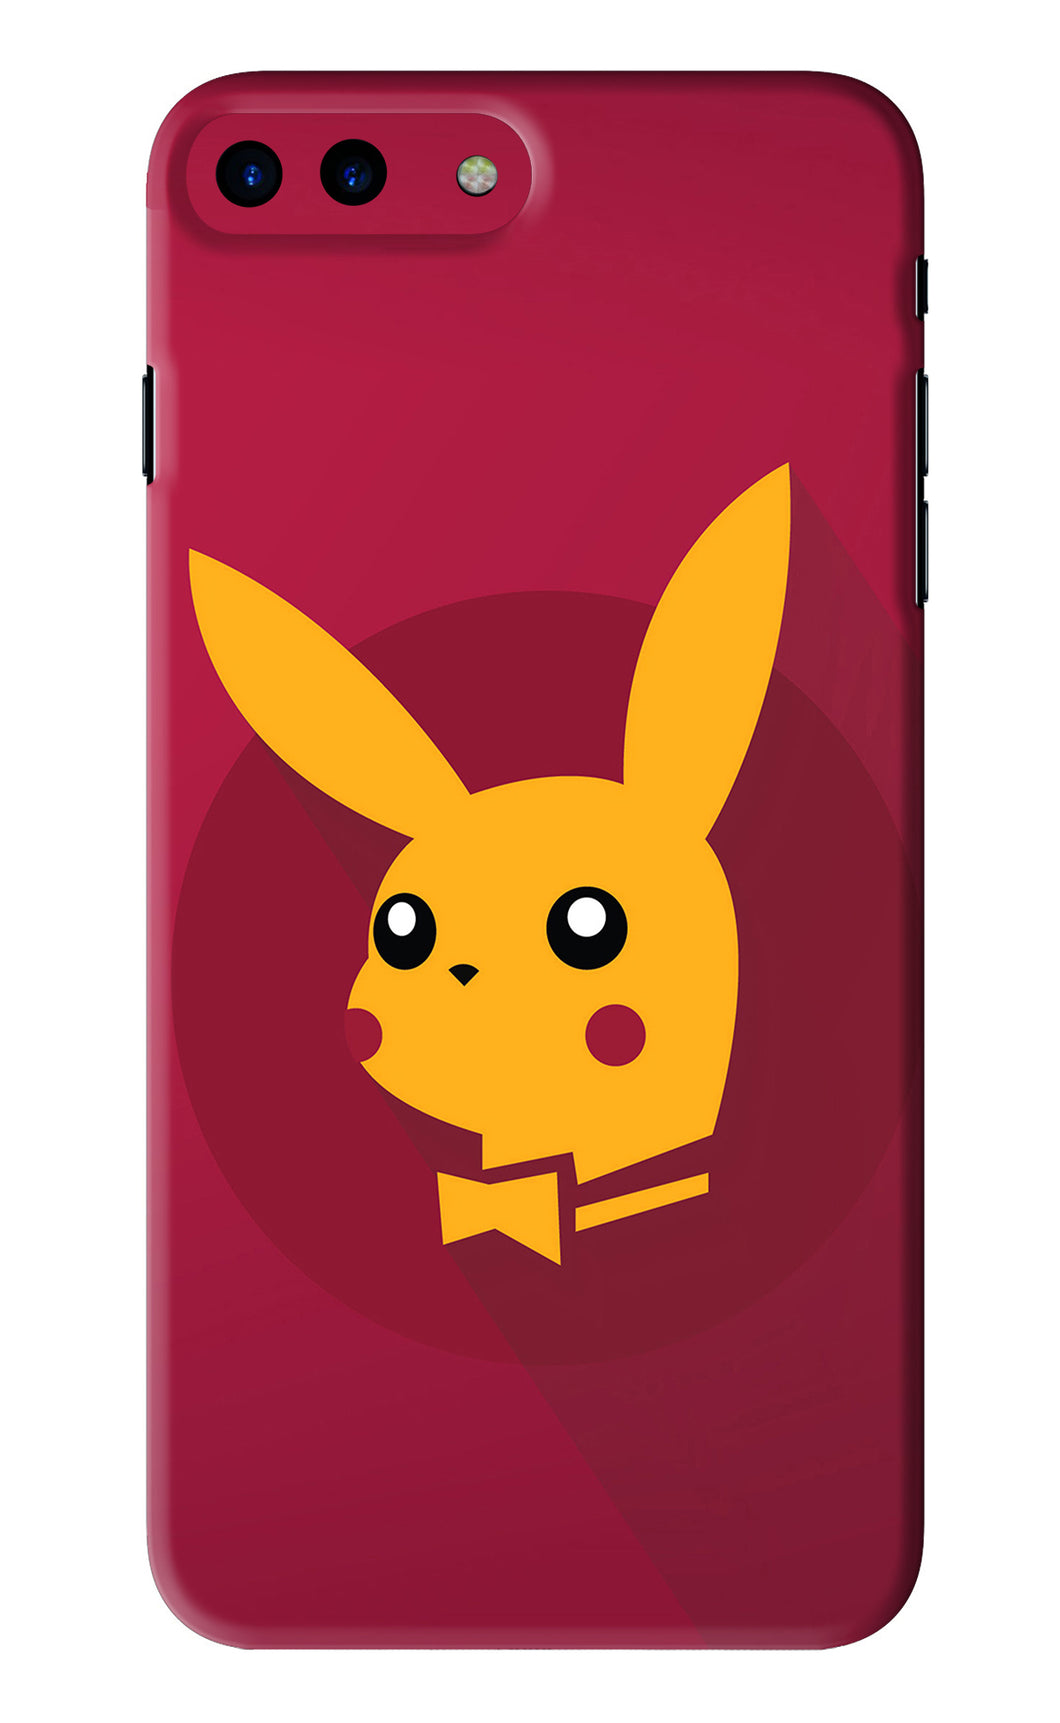 Pikachu iPhone 7 Plus Back Skin Wrap